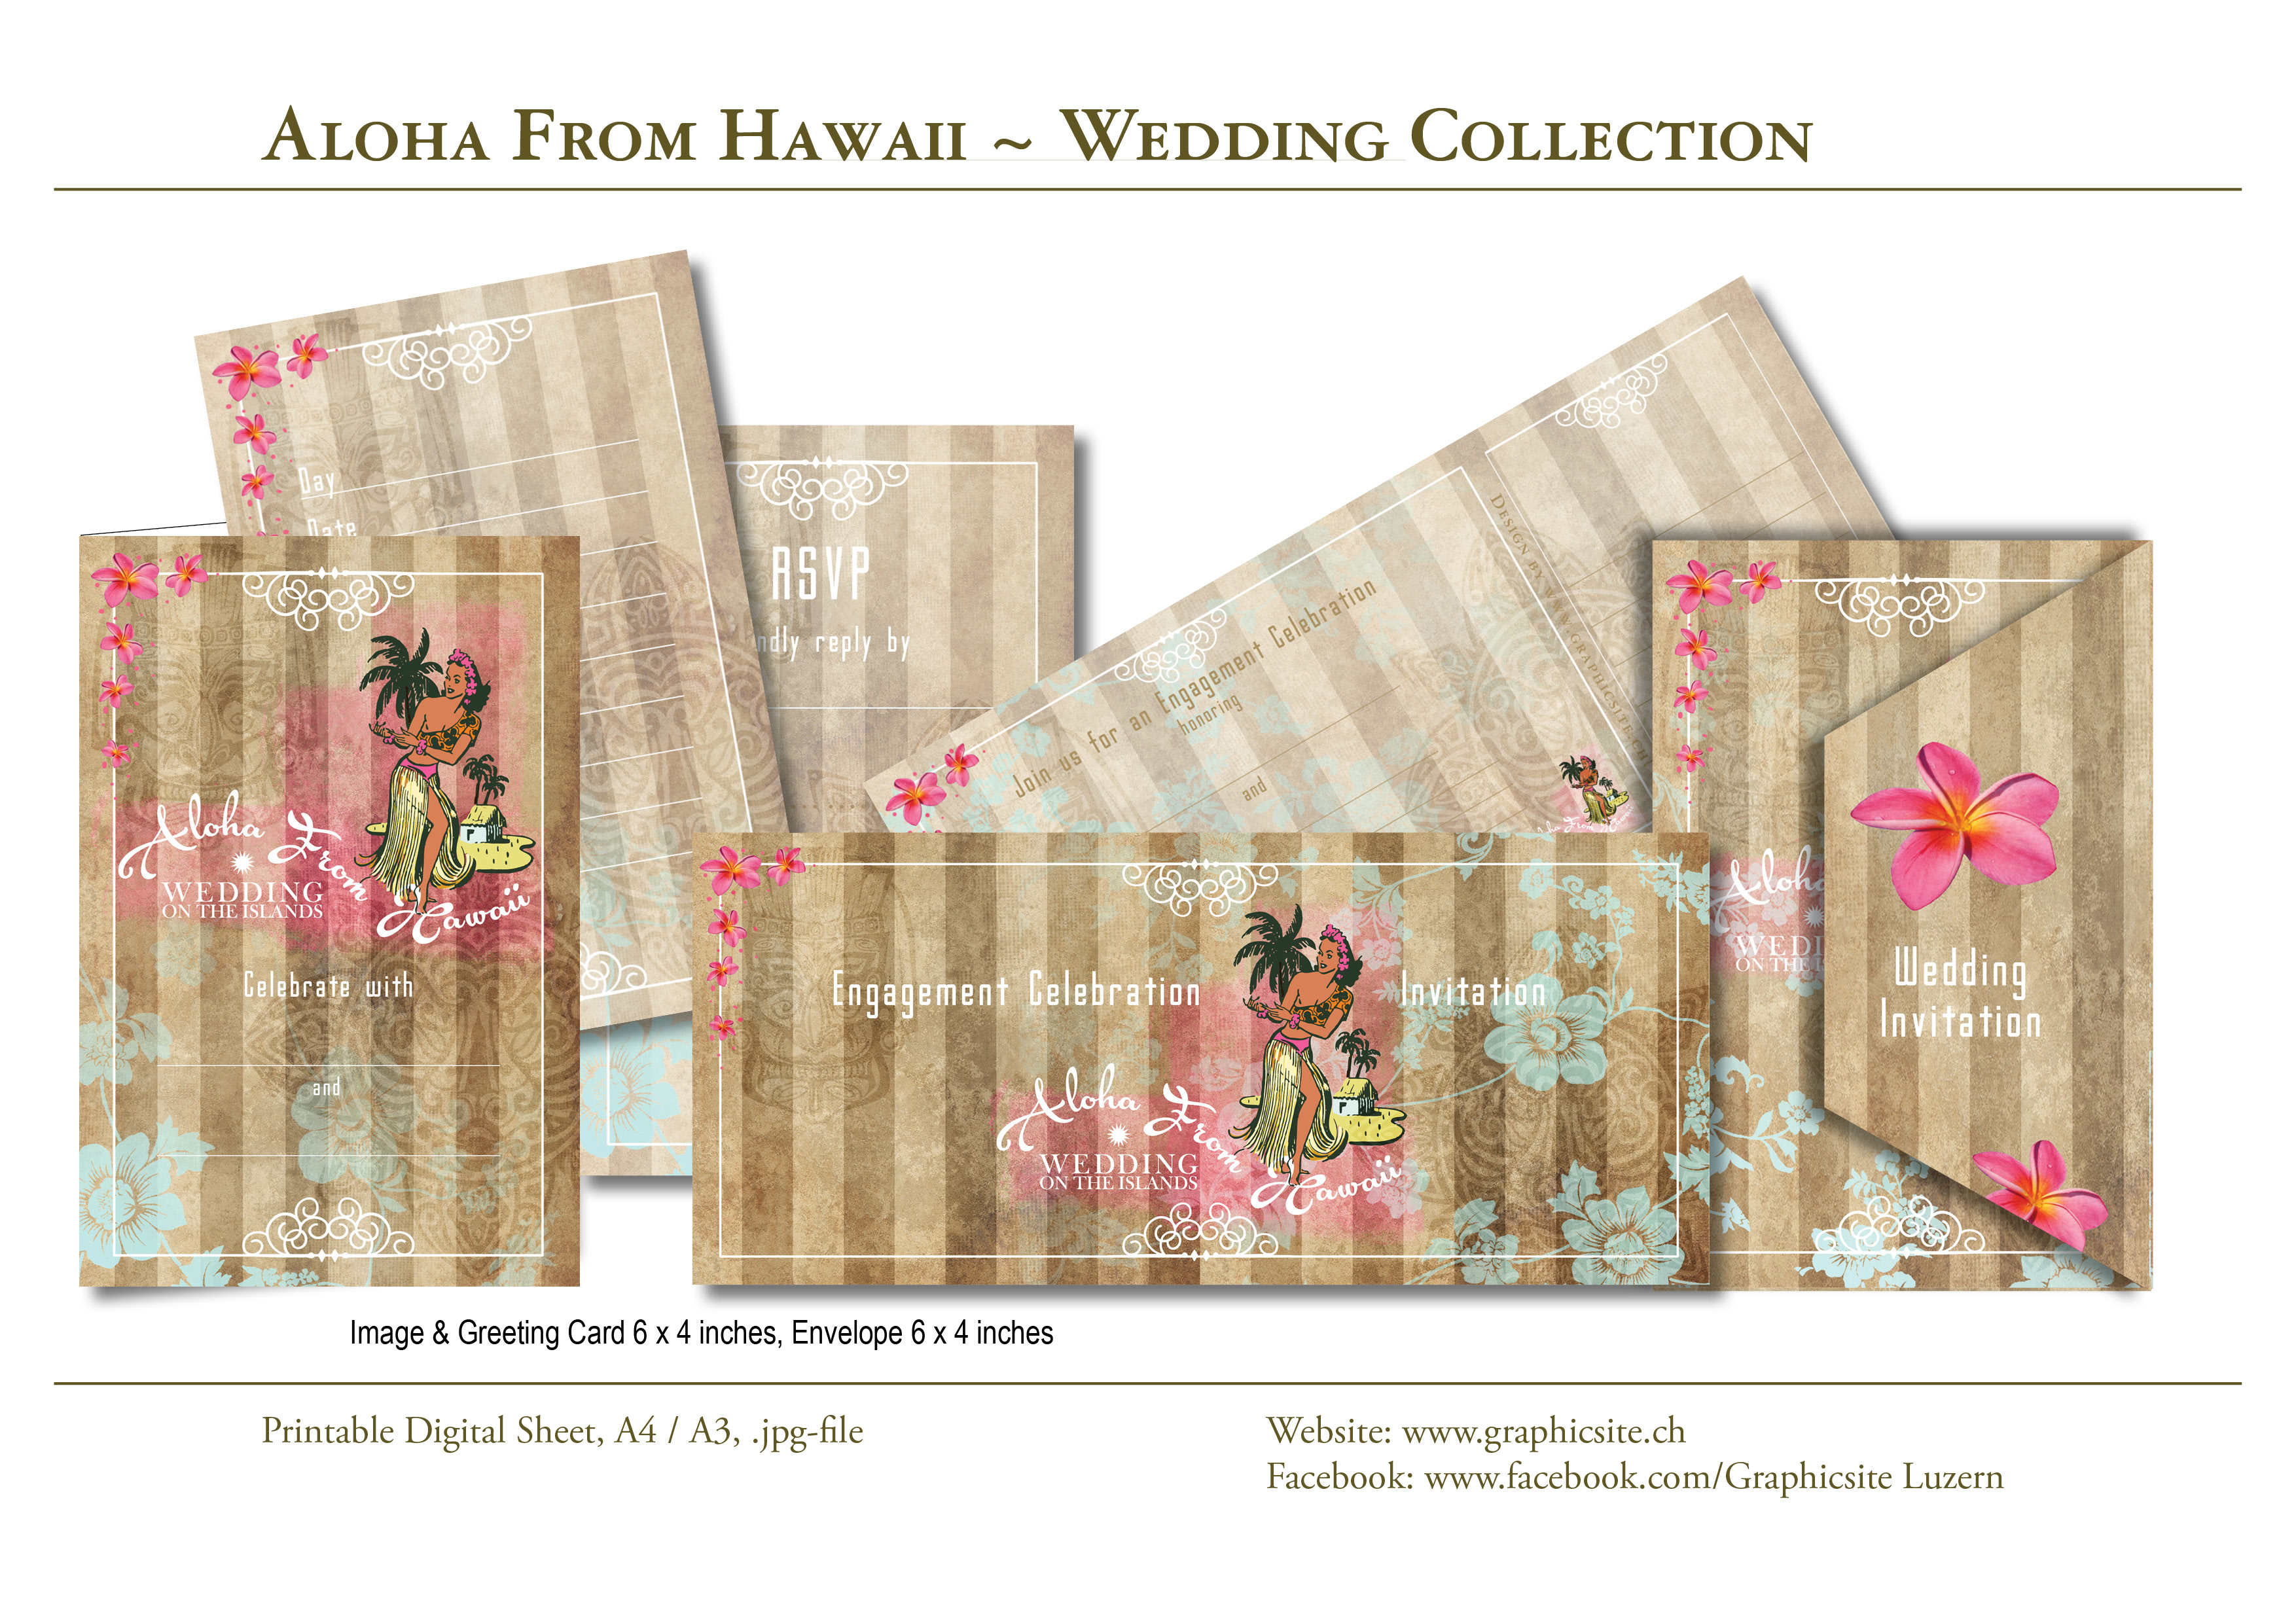 Printable Digital Sheets - Wedding Invitation Collection - AlohaFromHawaii - #wedding, #invitation, #cards, #invites, #hawaii, #polinesean, #island, #tropical, #scrapbooking,